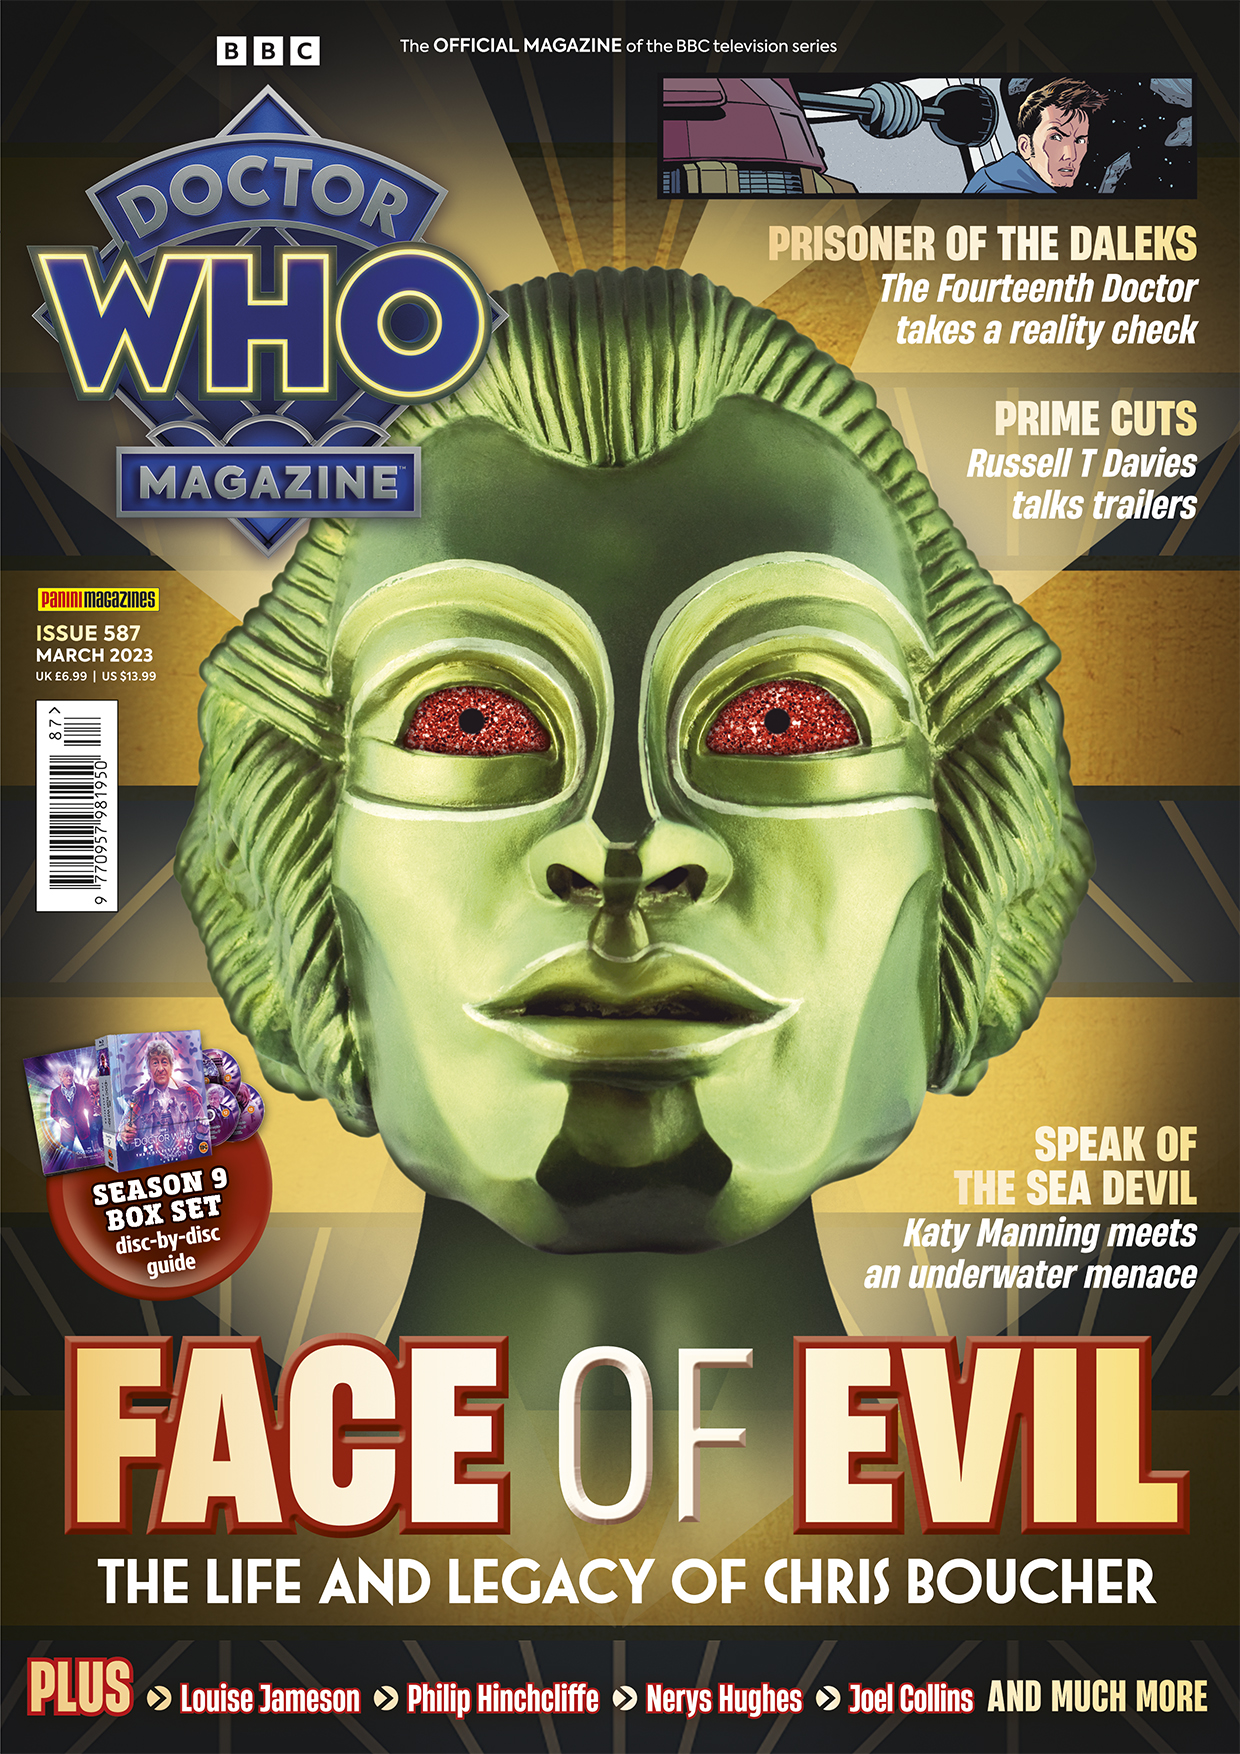 Dr Who Magazine Volume 587